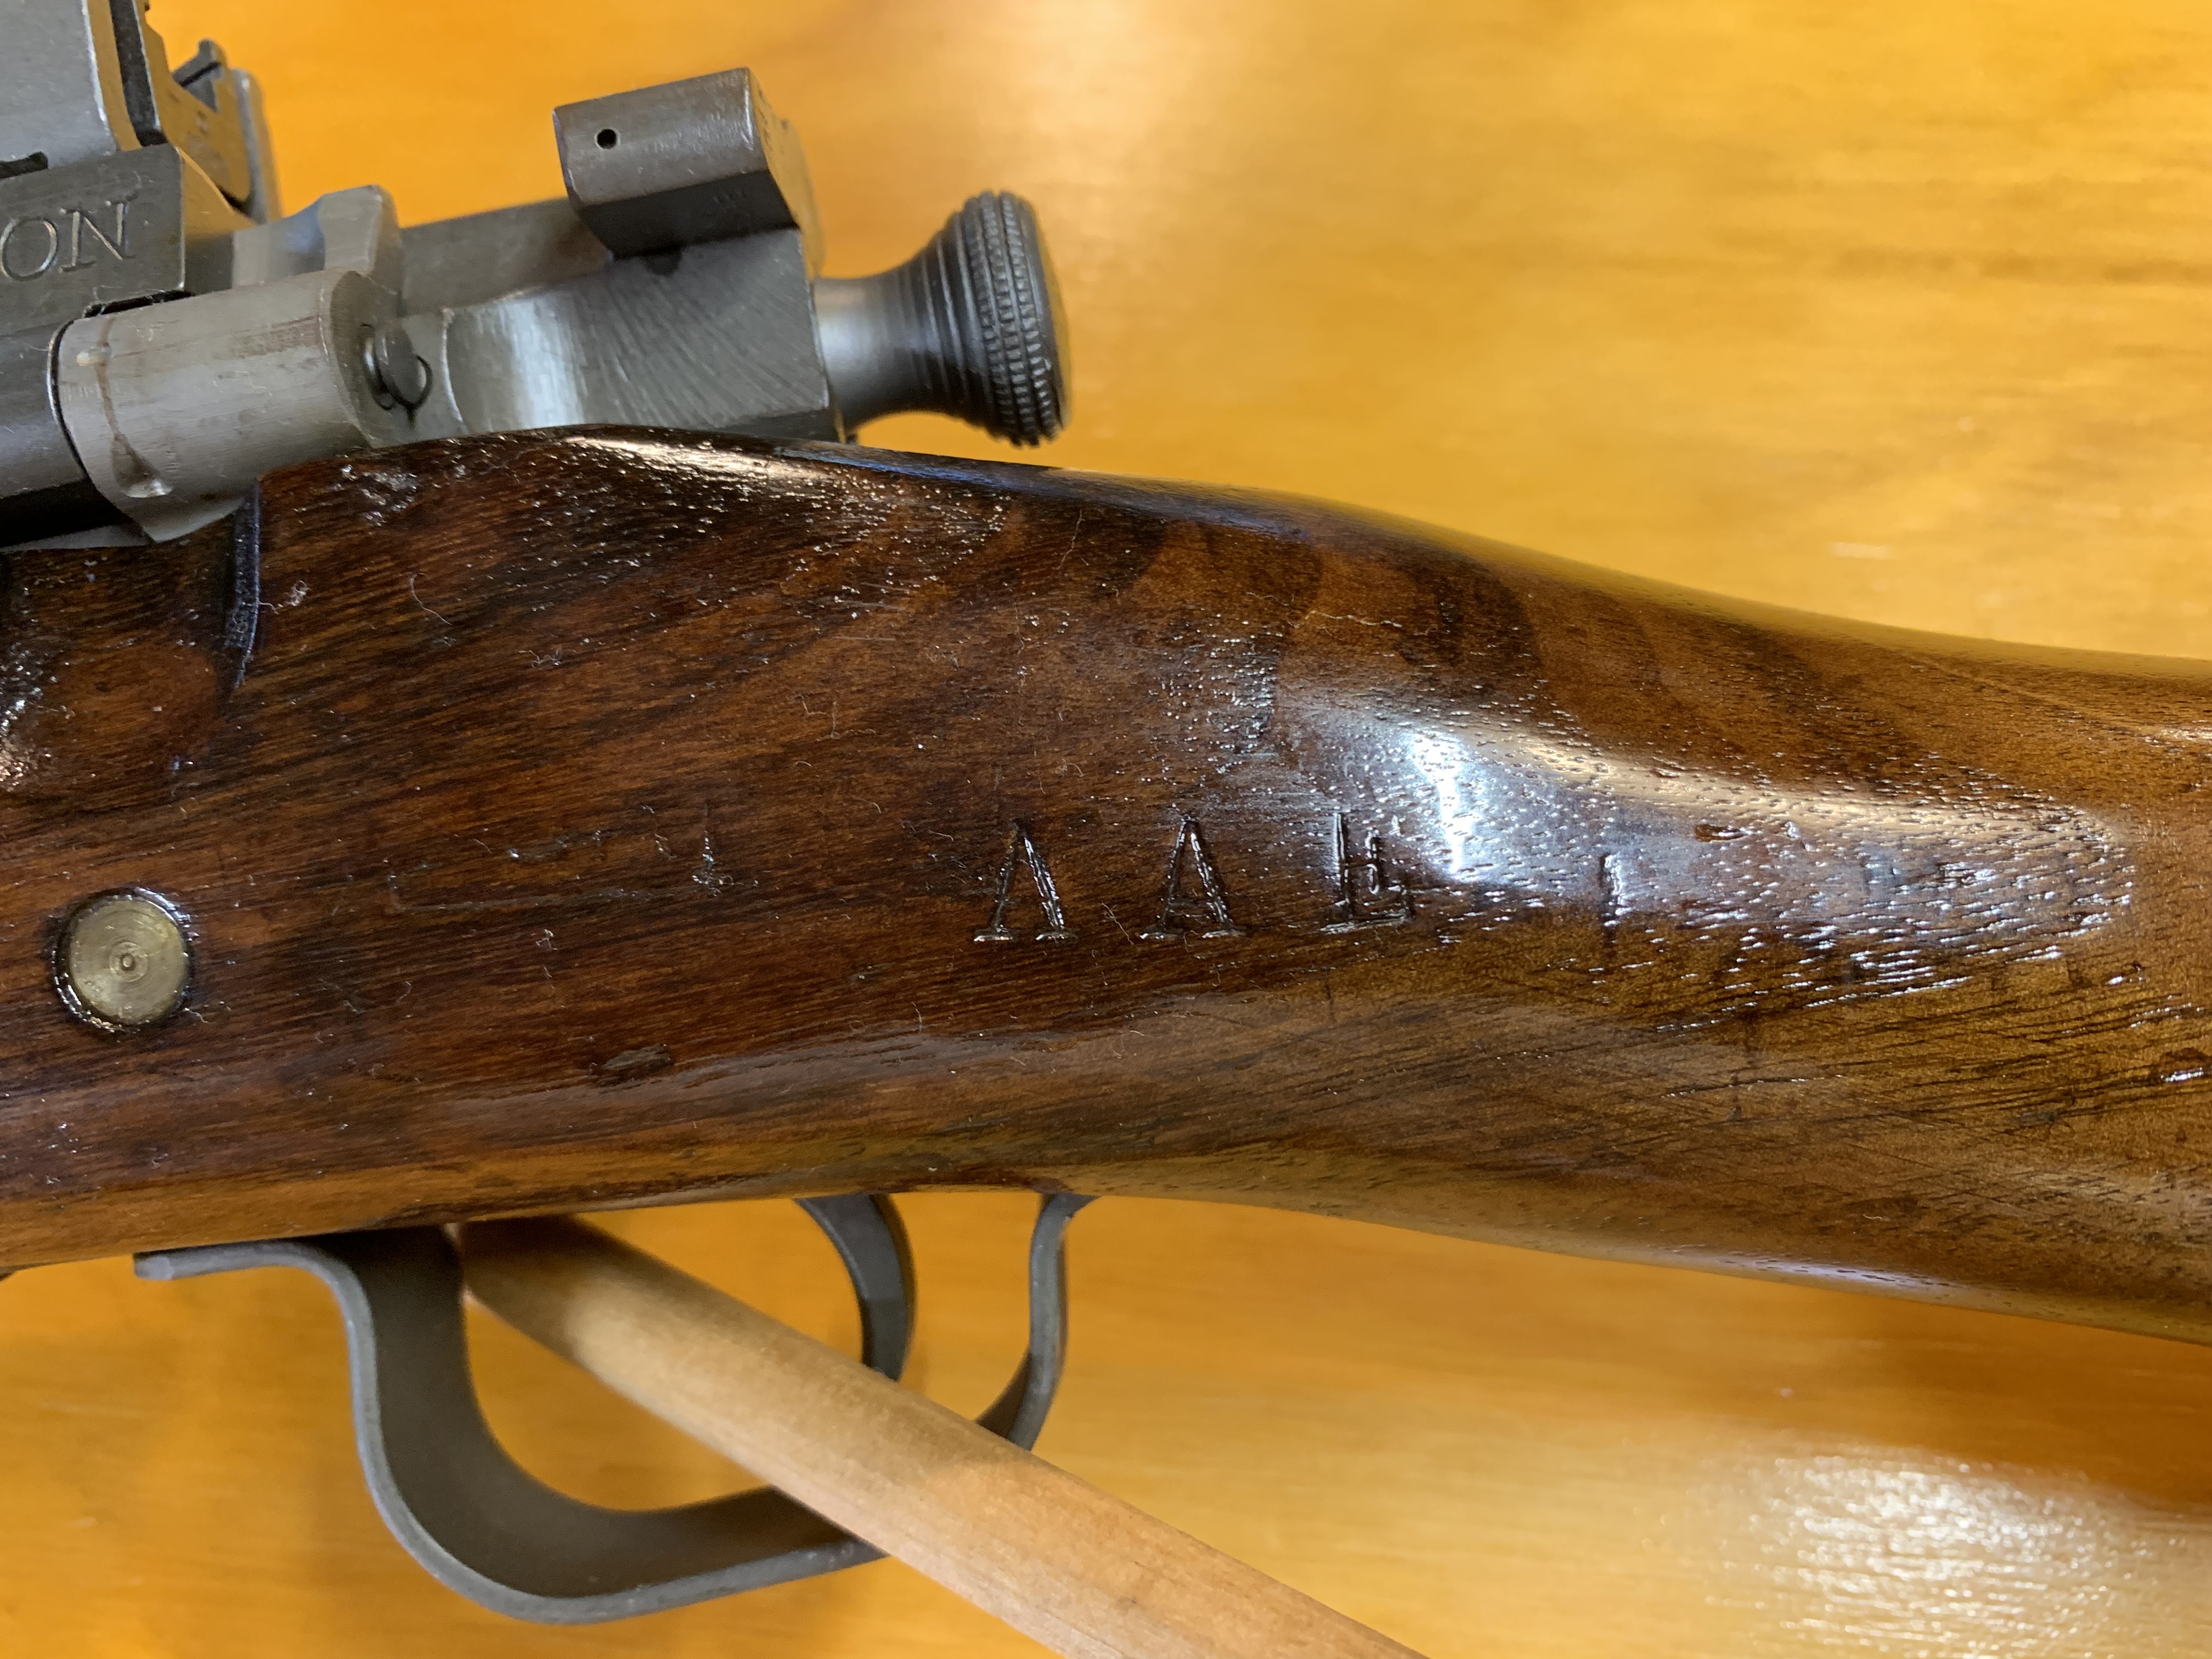 CMP Remington 1903A3